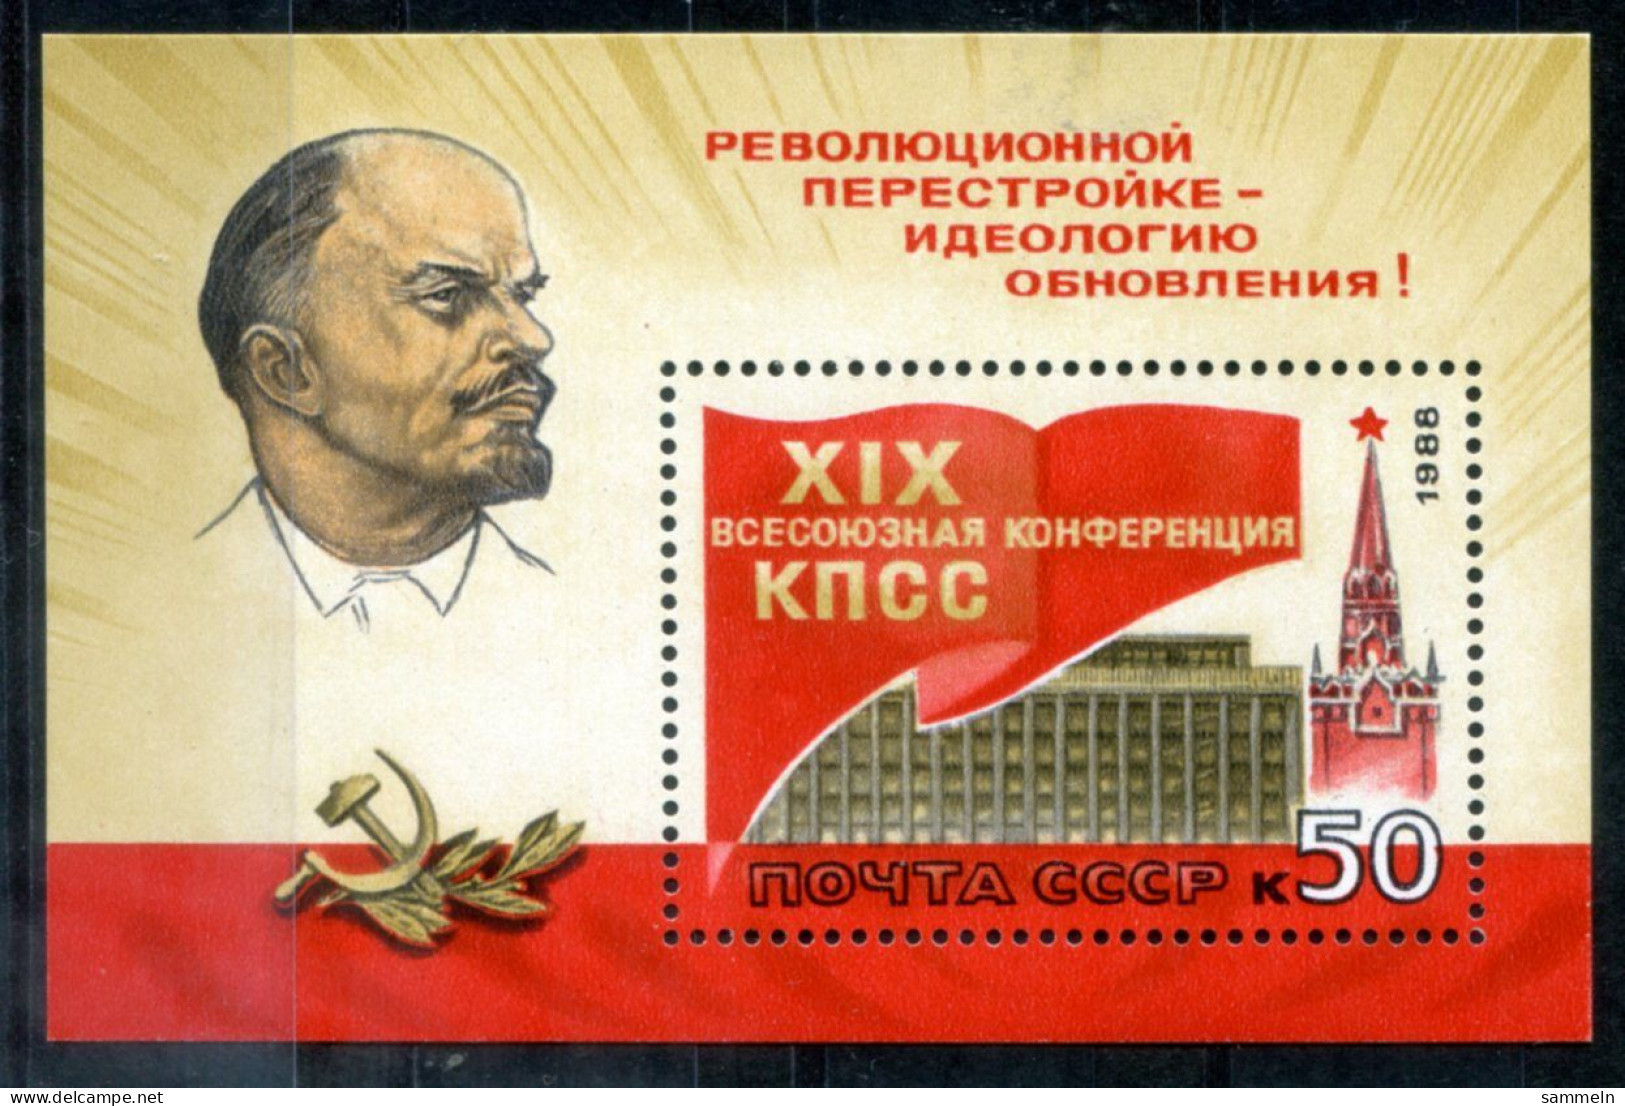 UdSSR Block 201, Bl.201 Mnh - Lenin, Spasskij-Turm, Tower, Tour - USSR / URSS - Blocks & Kleinbögen